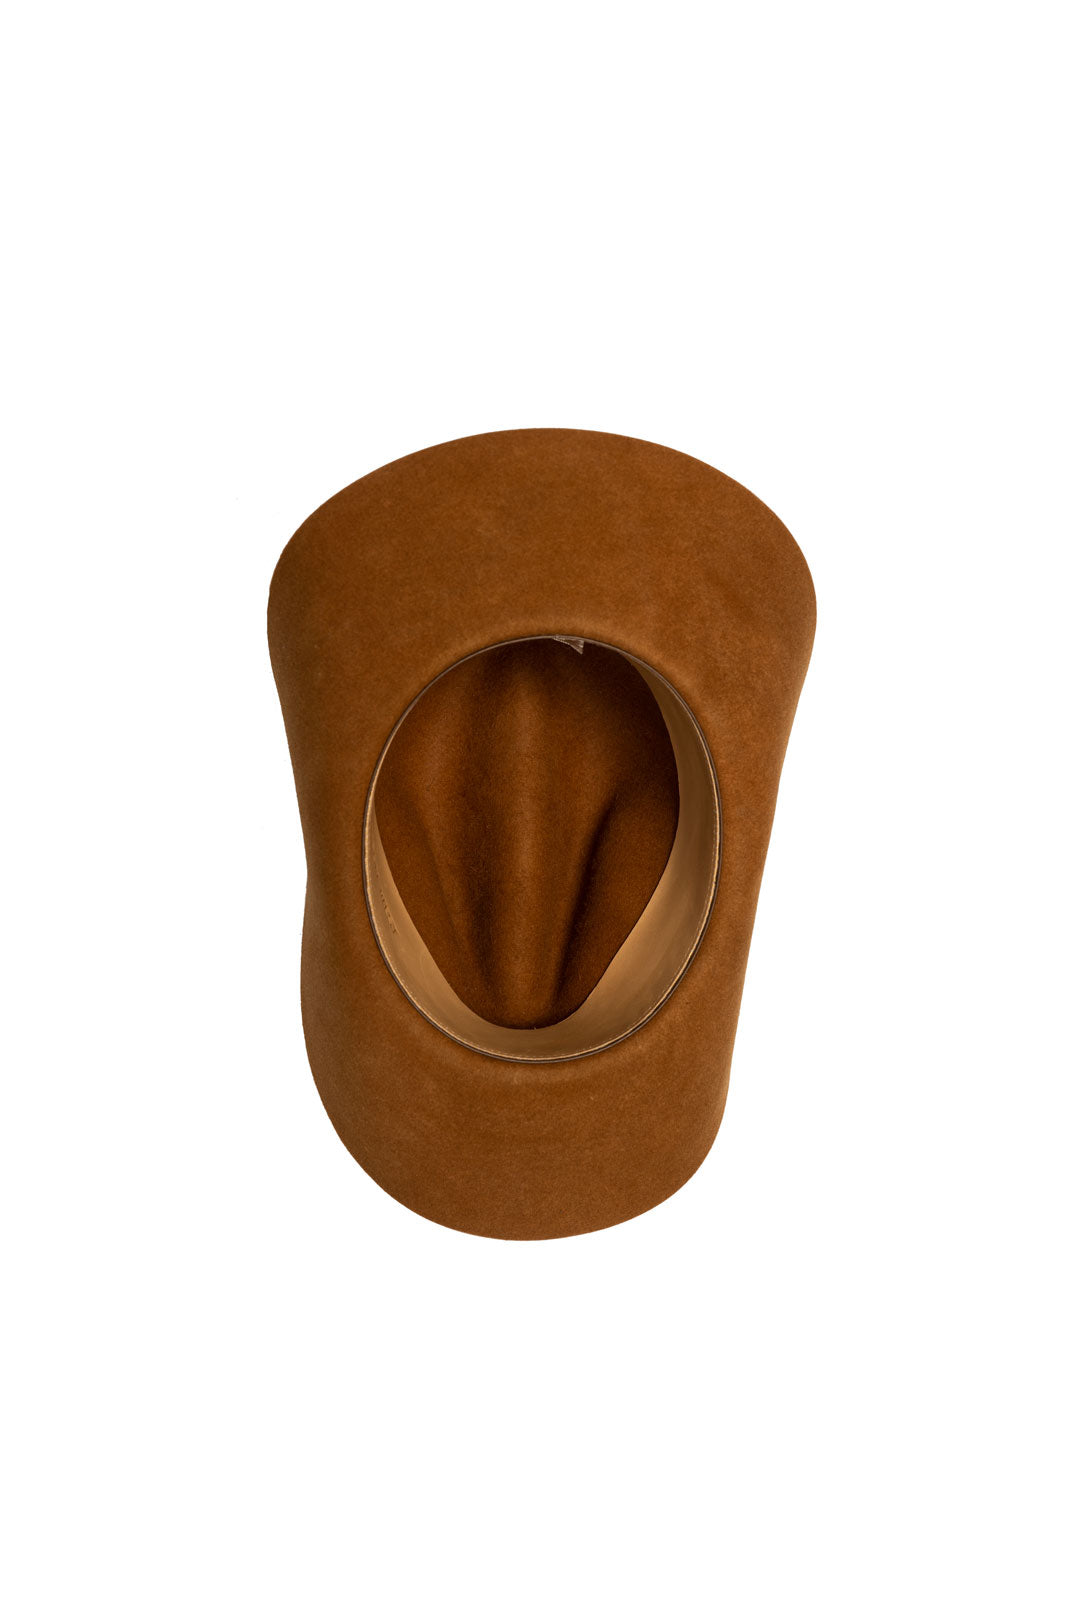 Buffalo Hat (Rust)